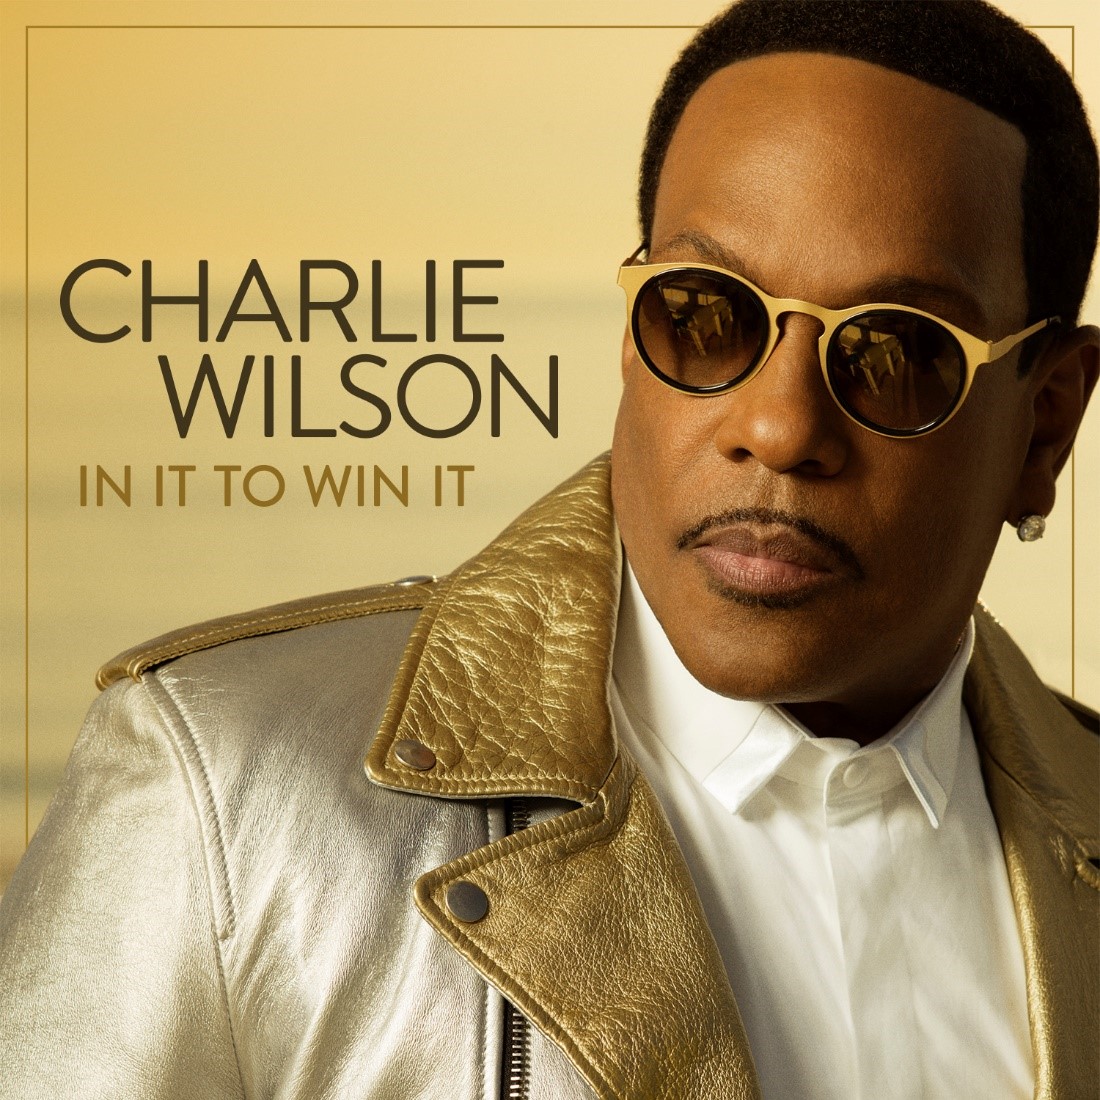 Stream Charlie Wilson's New Album "In It To Win It"